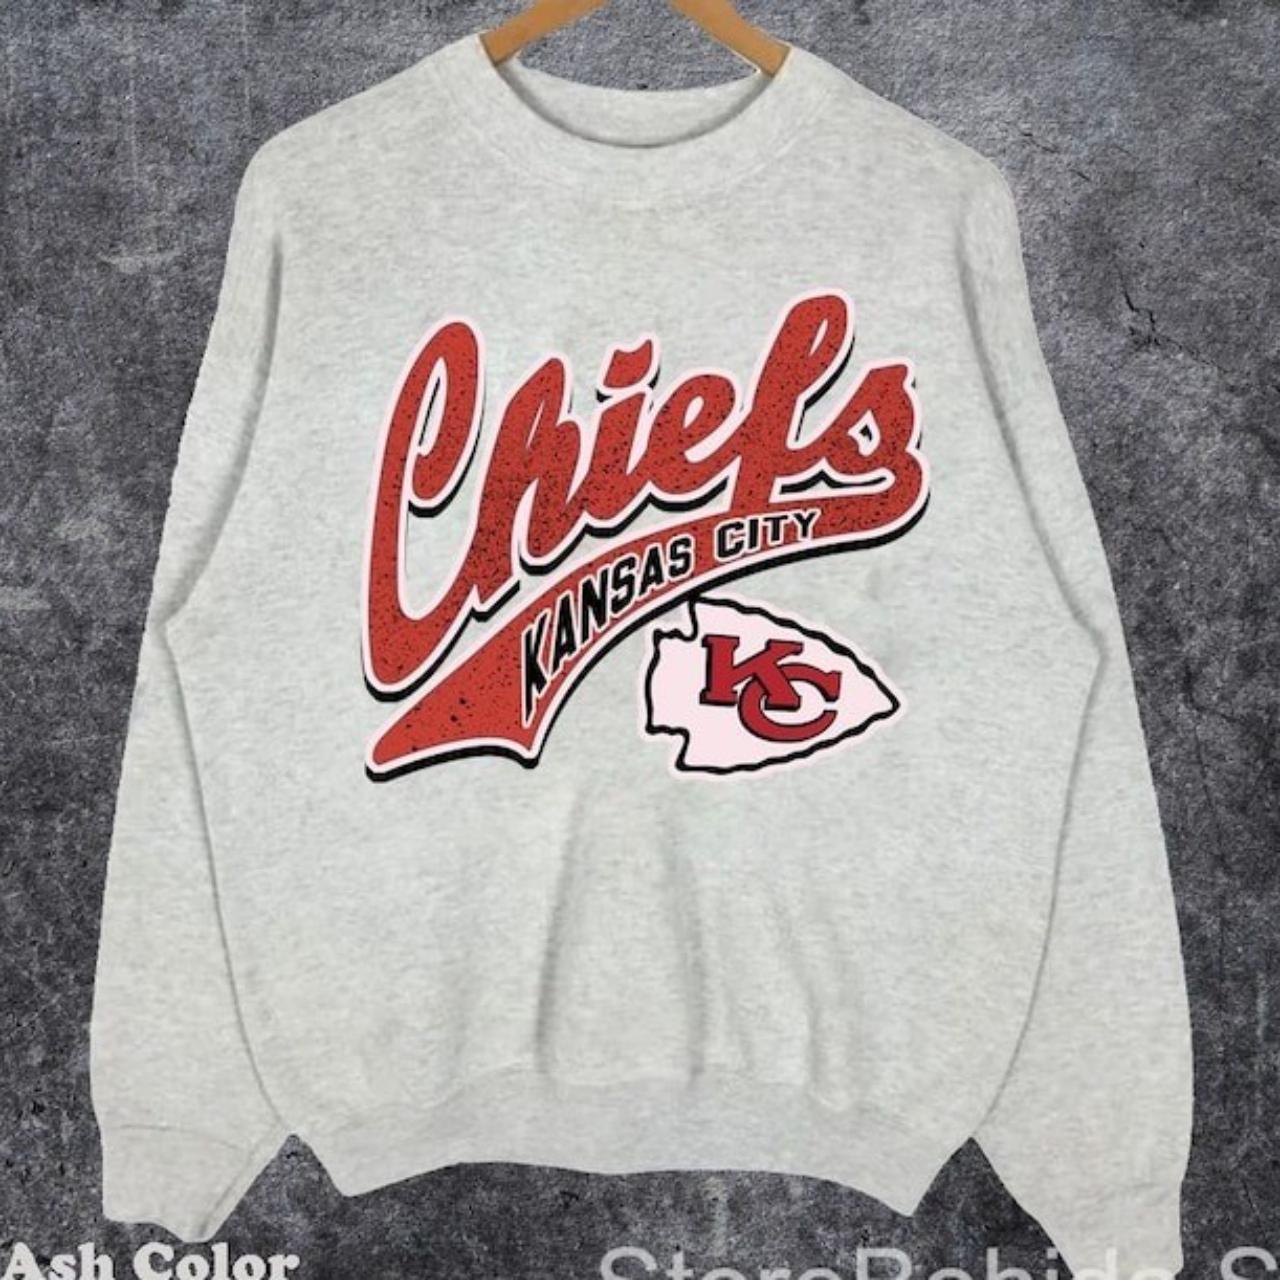 Vintage Style Kansas City Chiefs Crewneck Sweatshirt For Fan